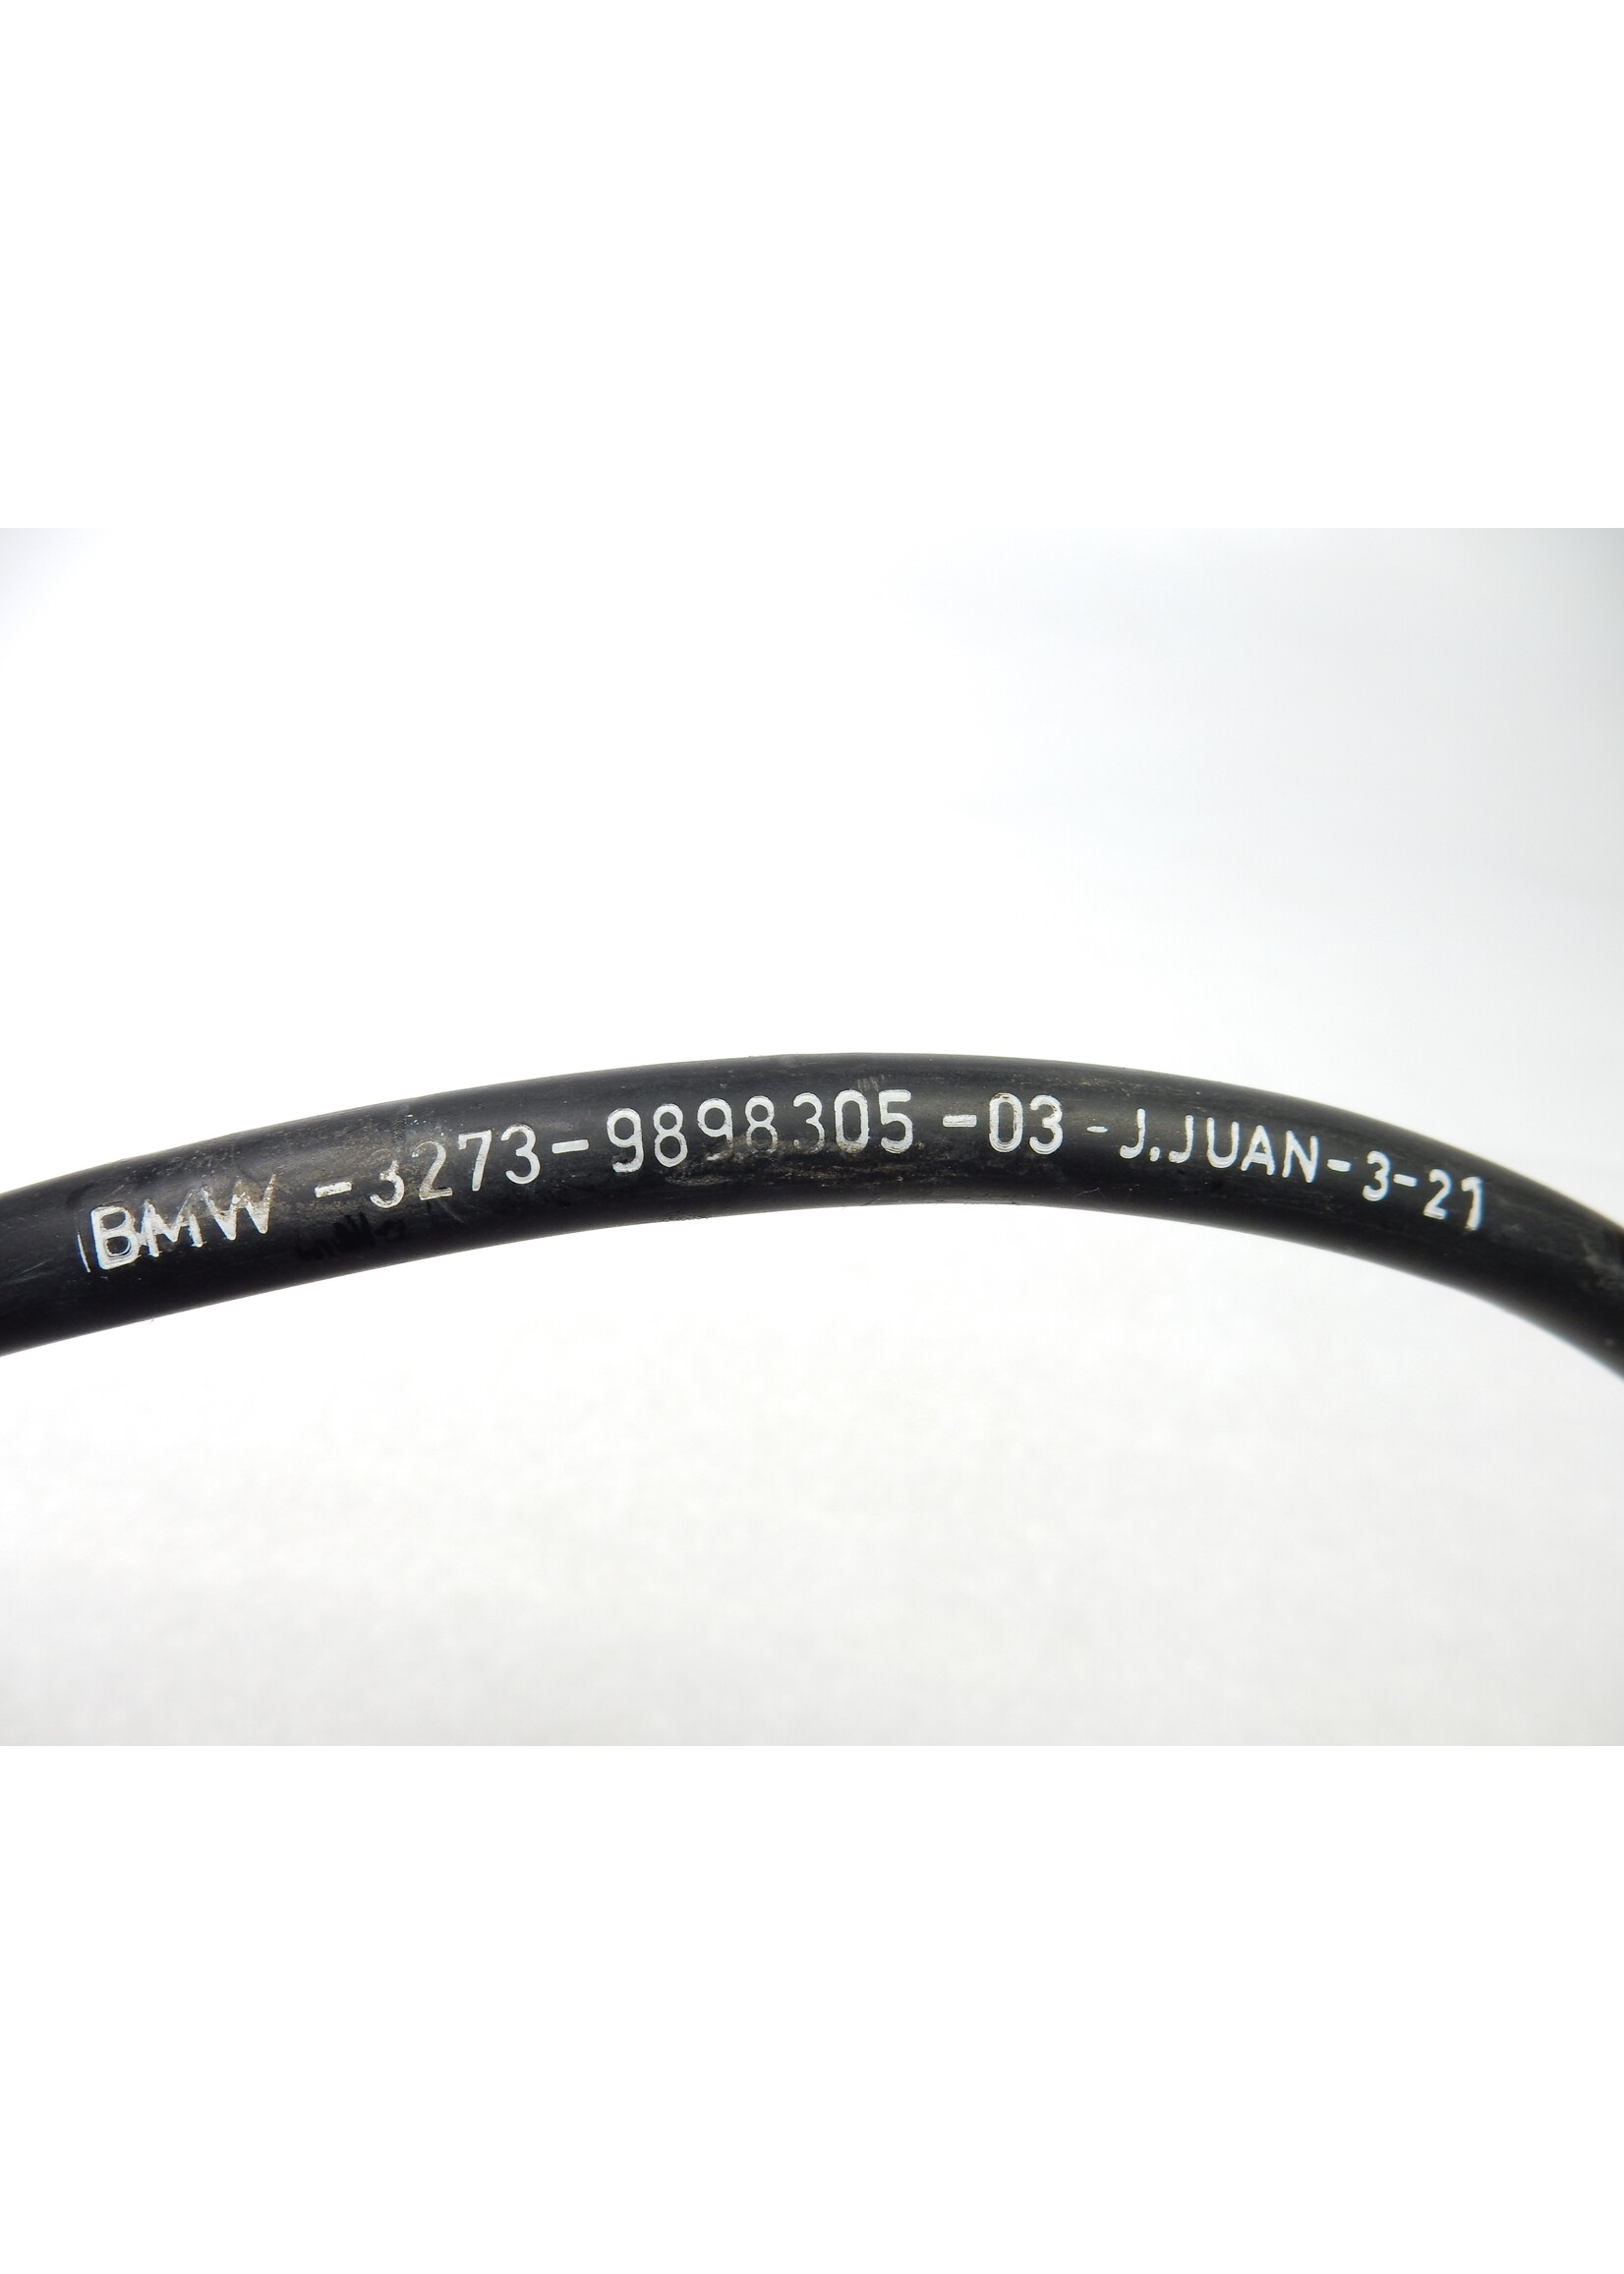 BMW BMW F 900 R Clutch cable / 32739898305